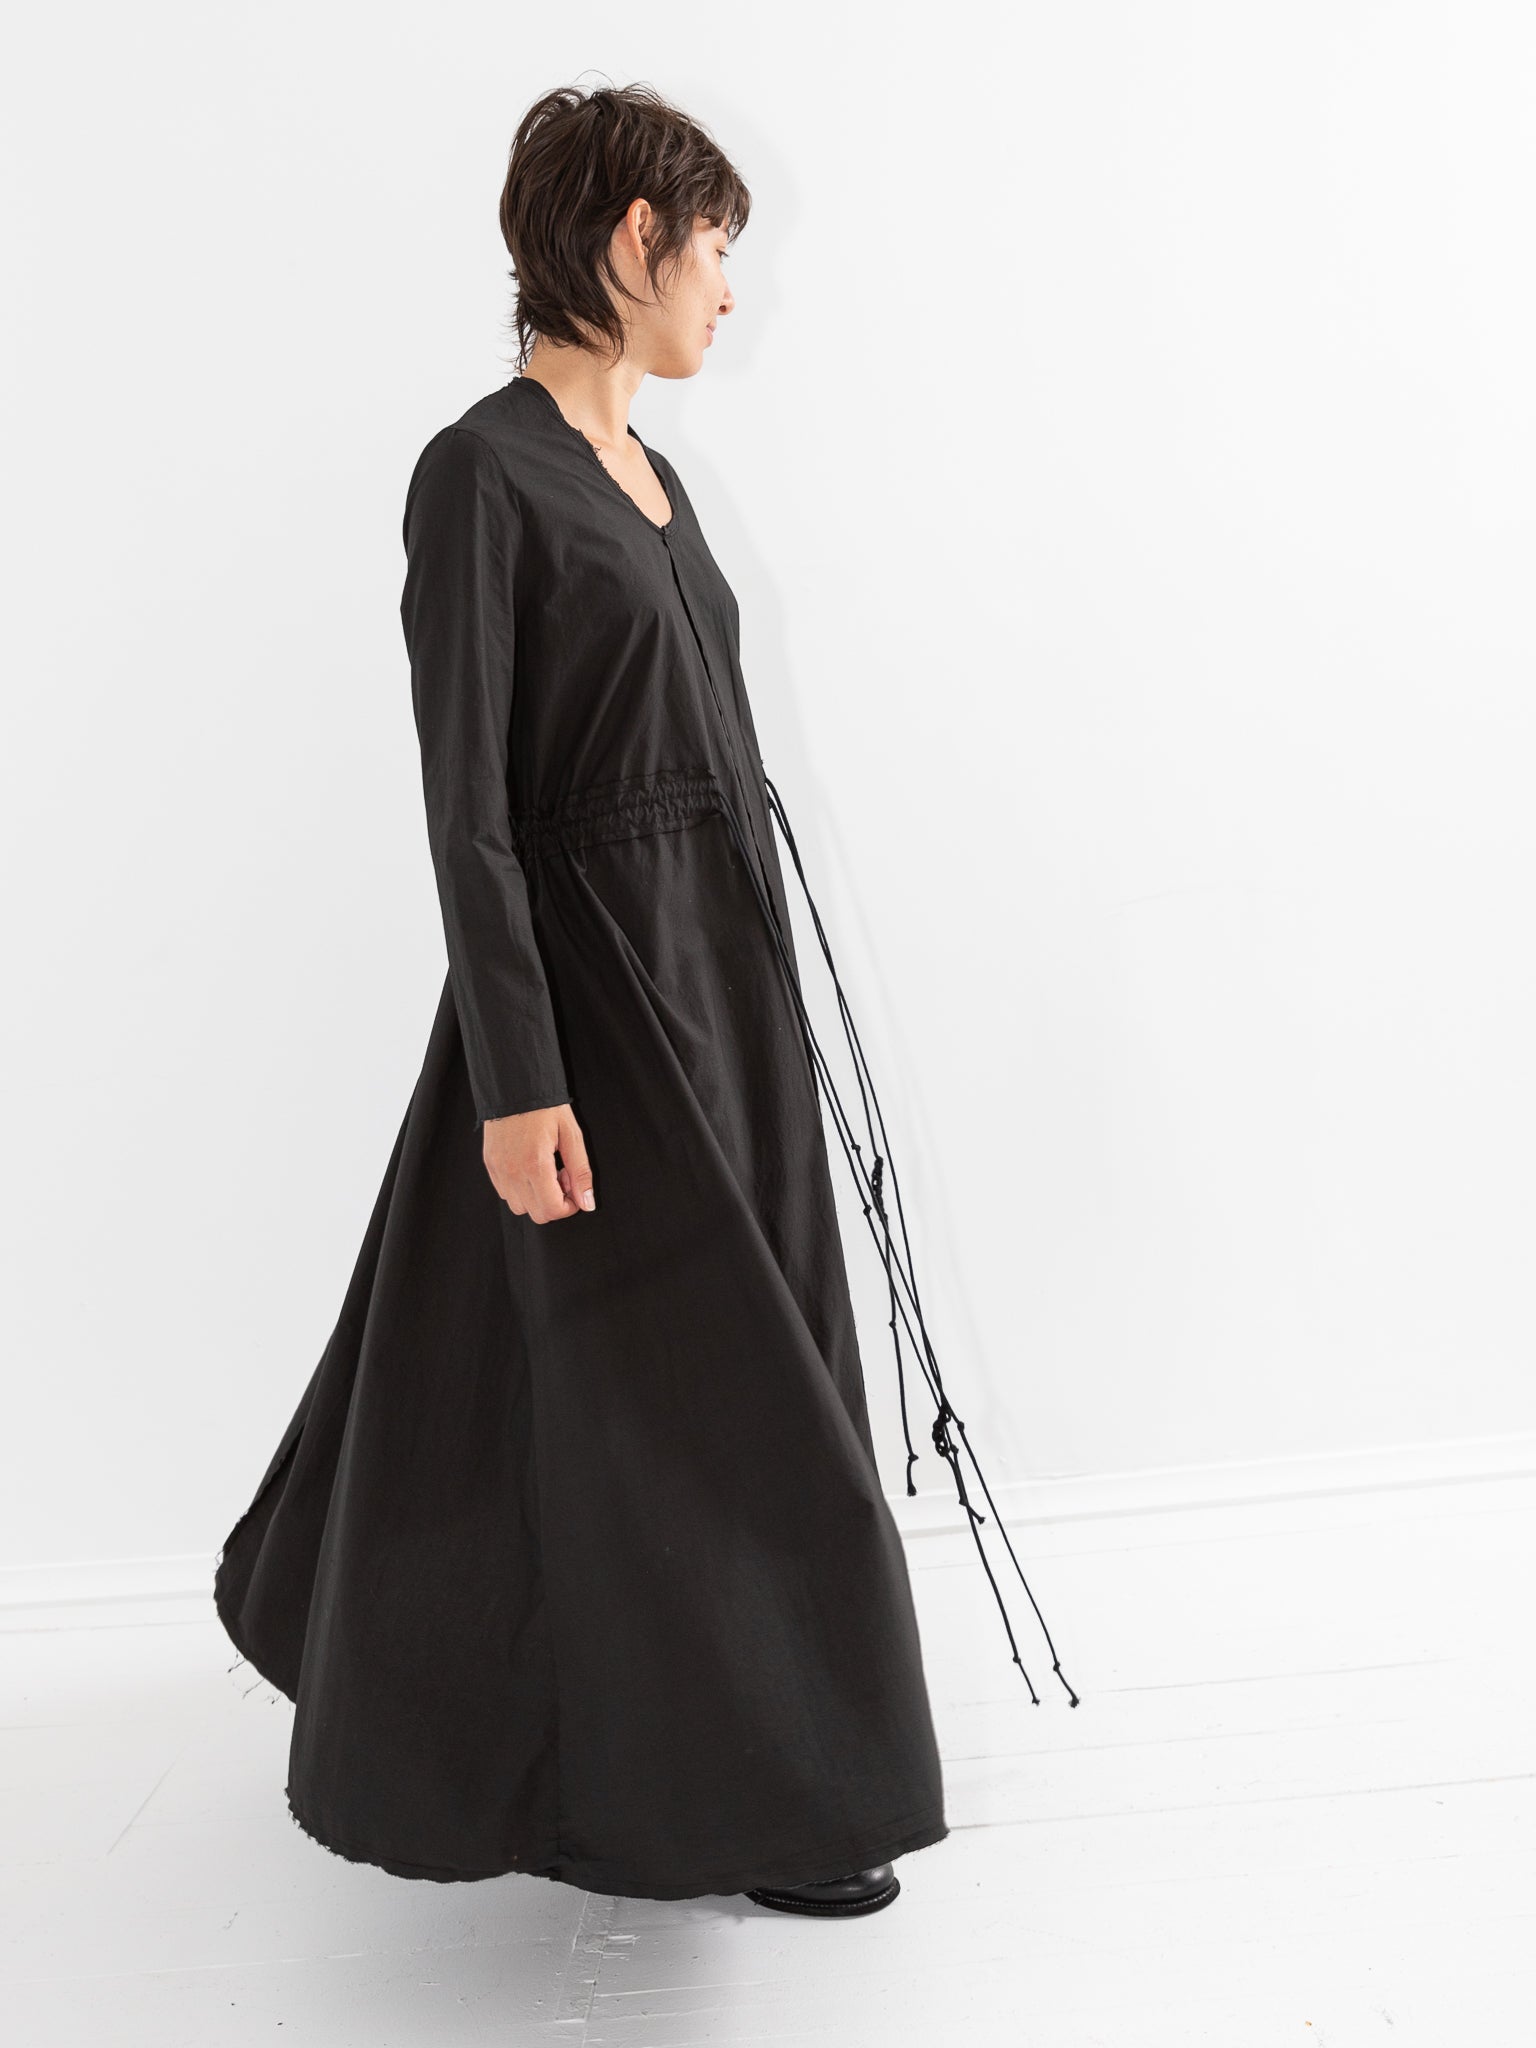 Serie Numerica Boxy Dress, Black - Worthwhile